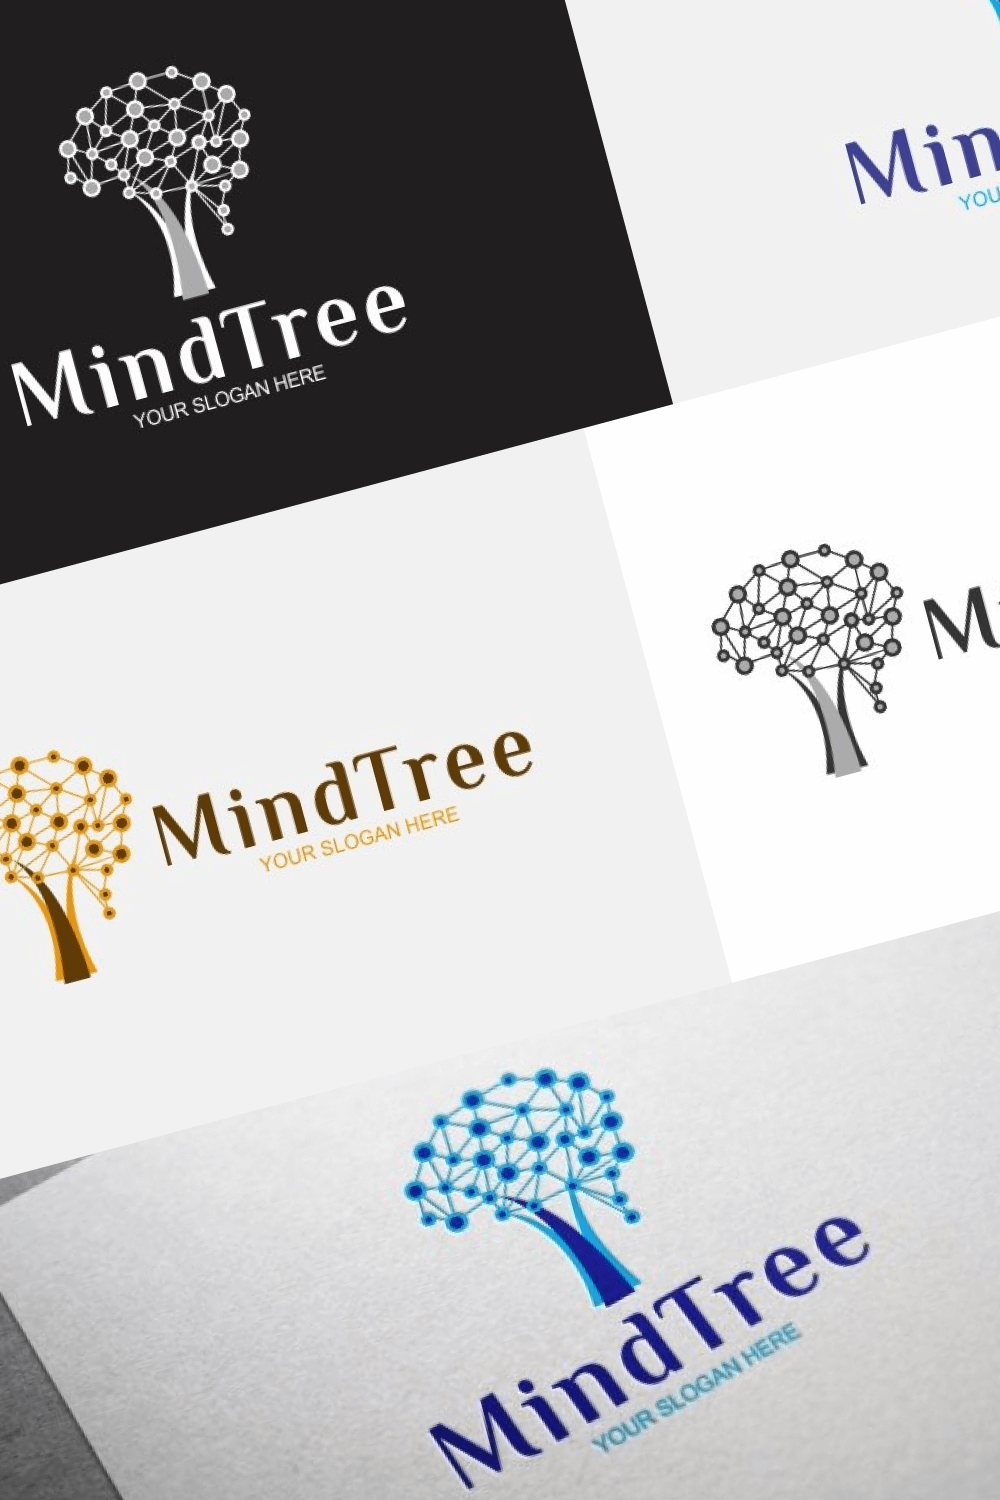 Mind tree logo.